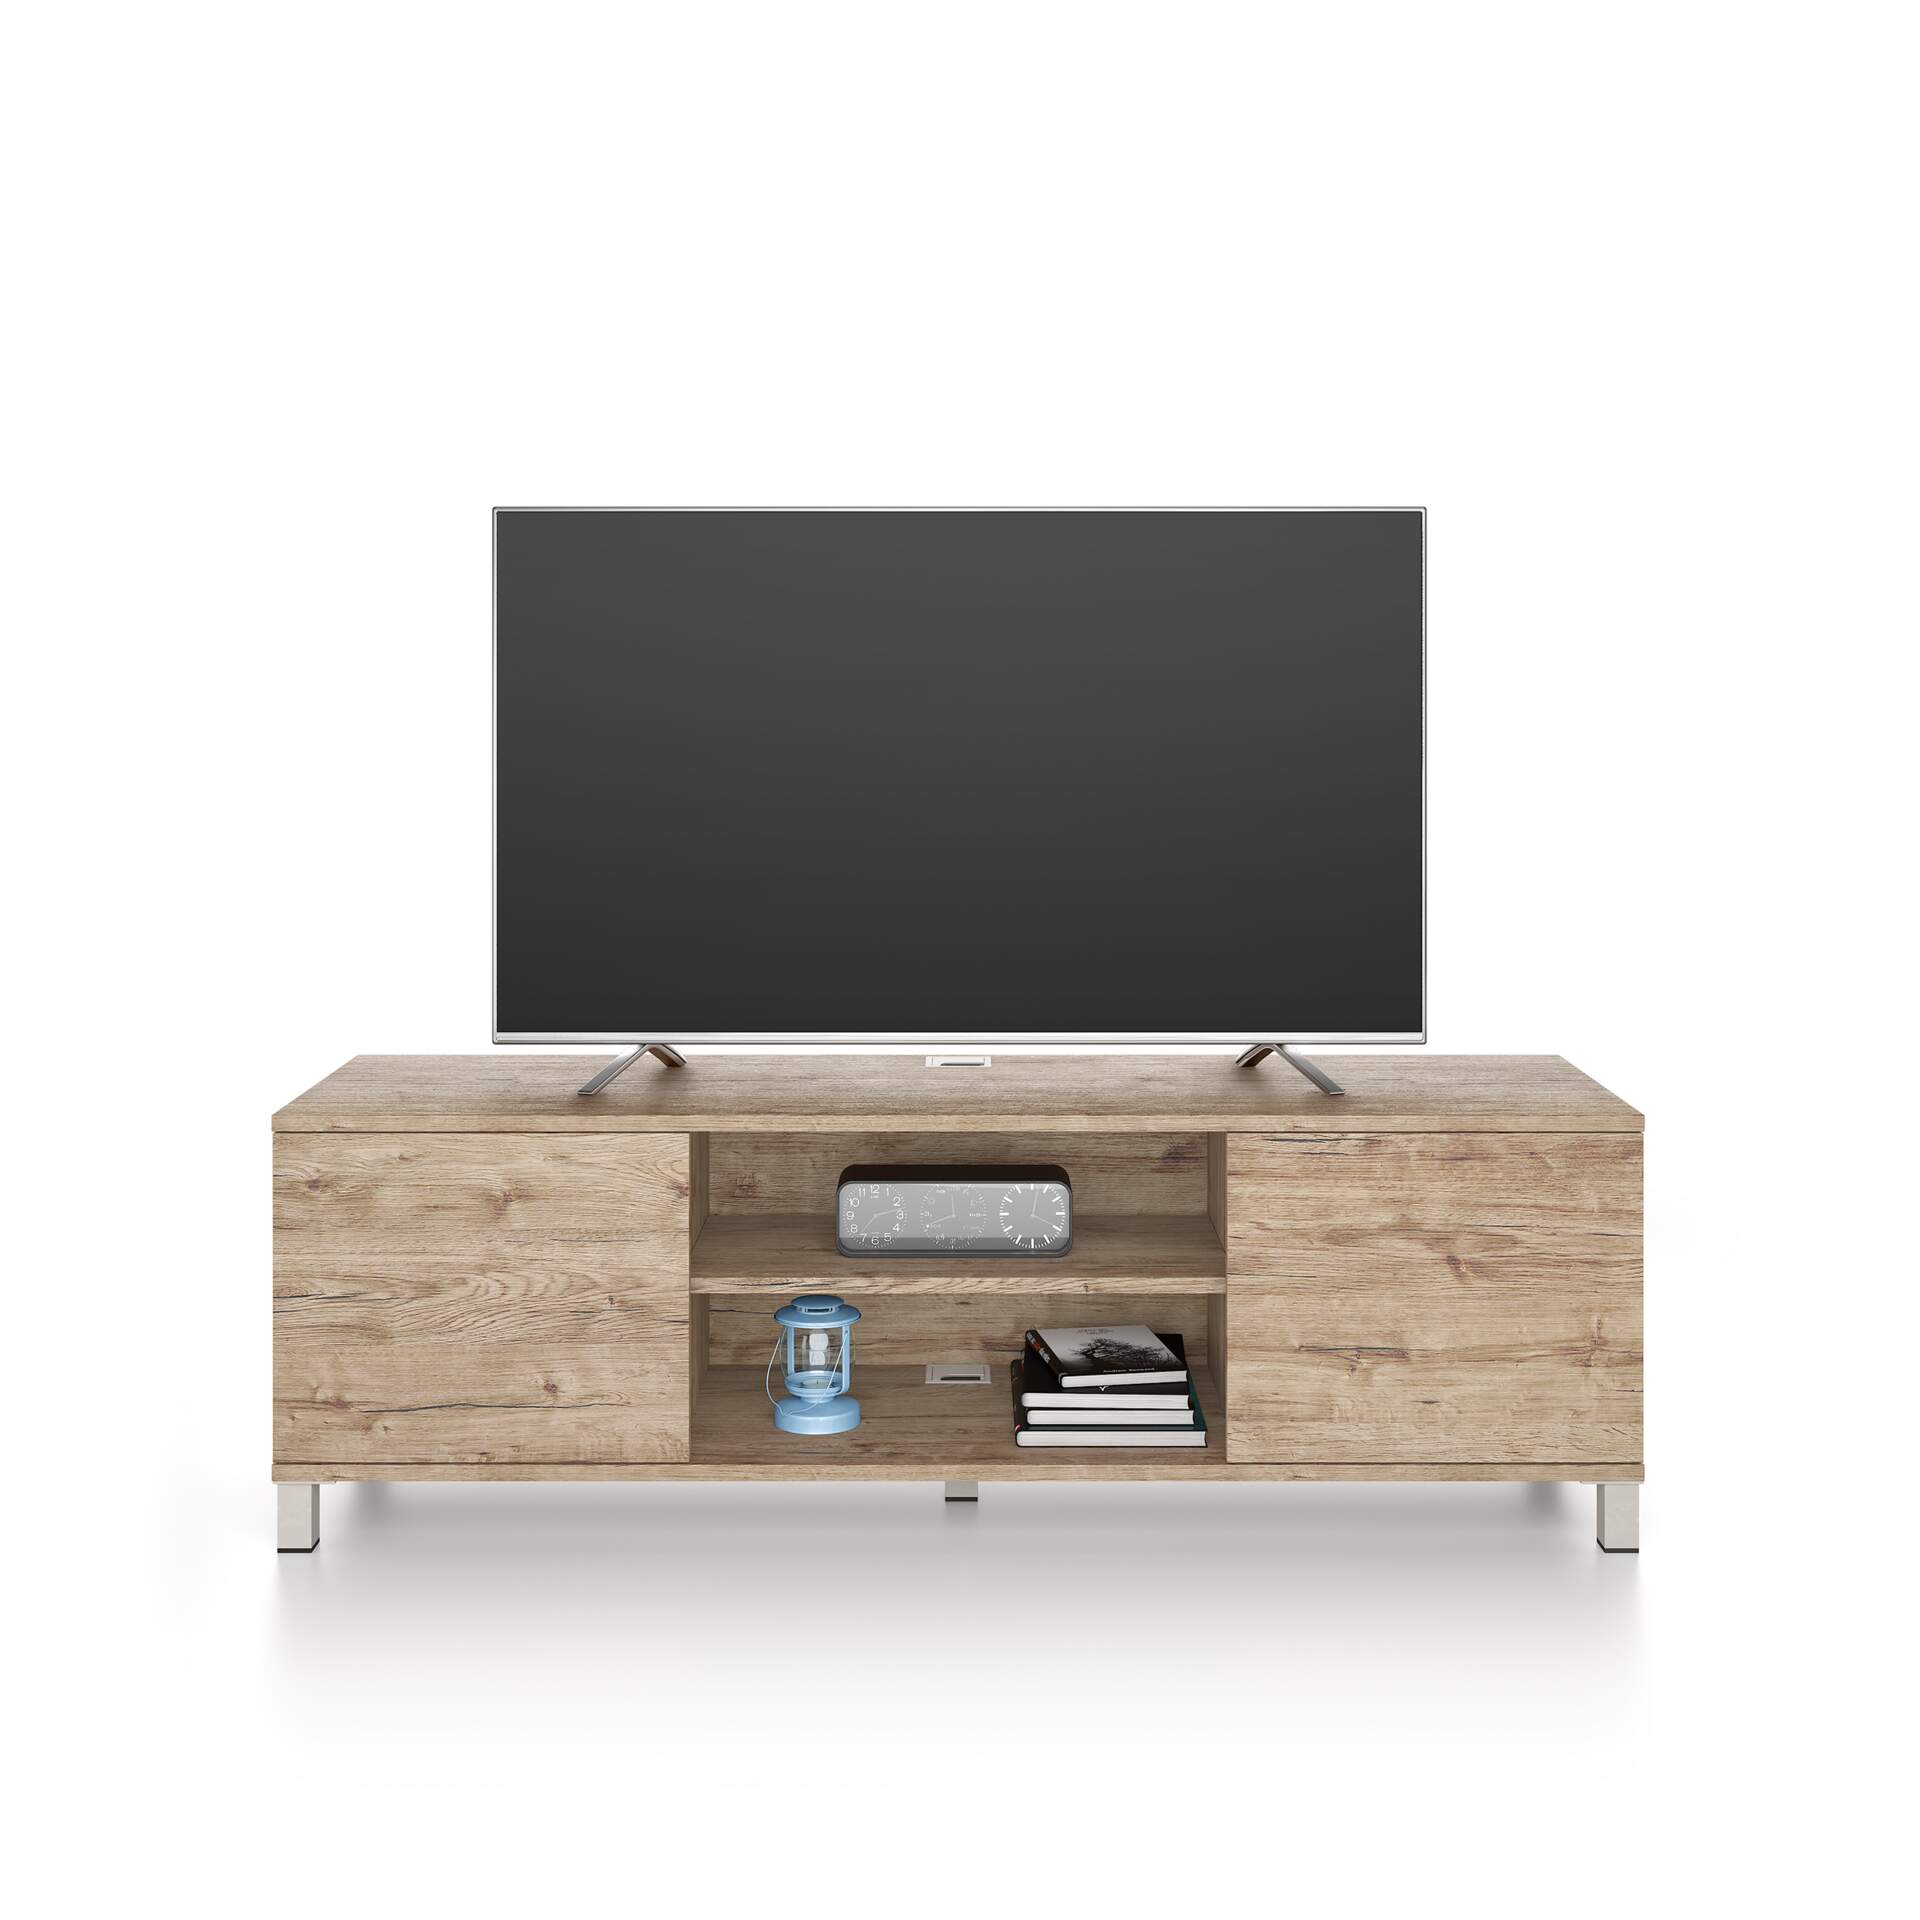 Mobili Fiver Mueble de TV Rachele, color Encina